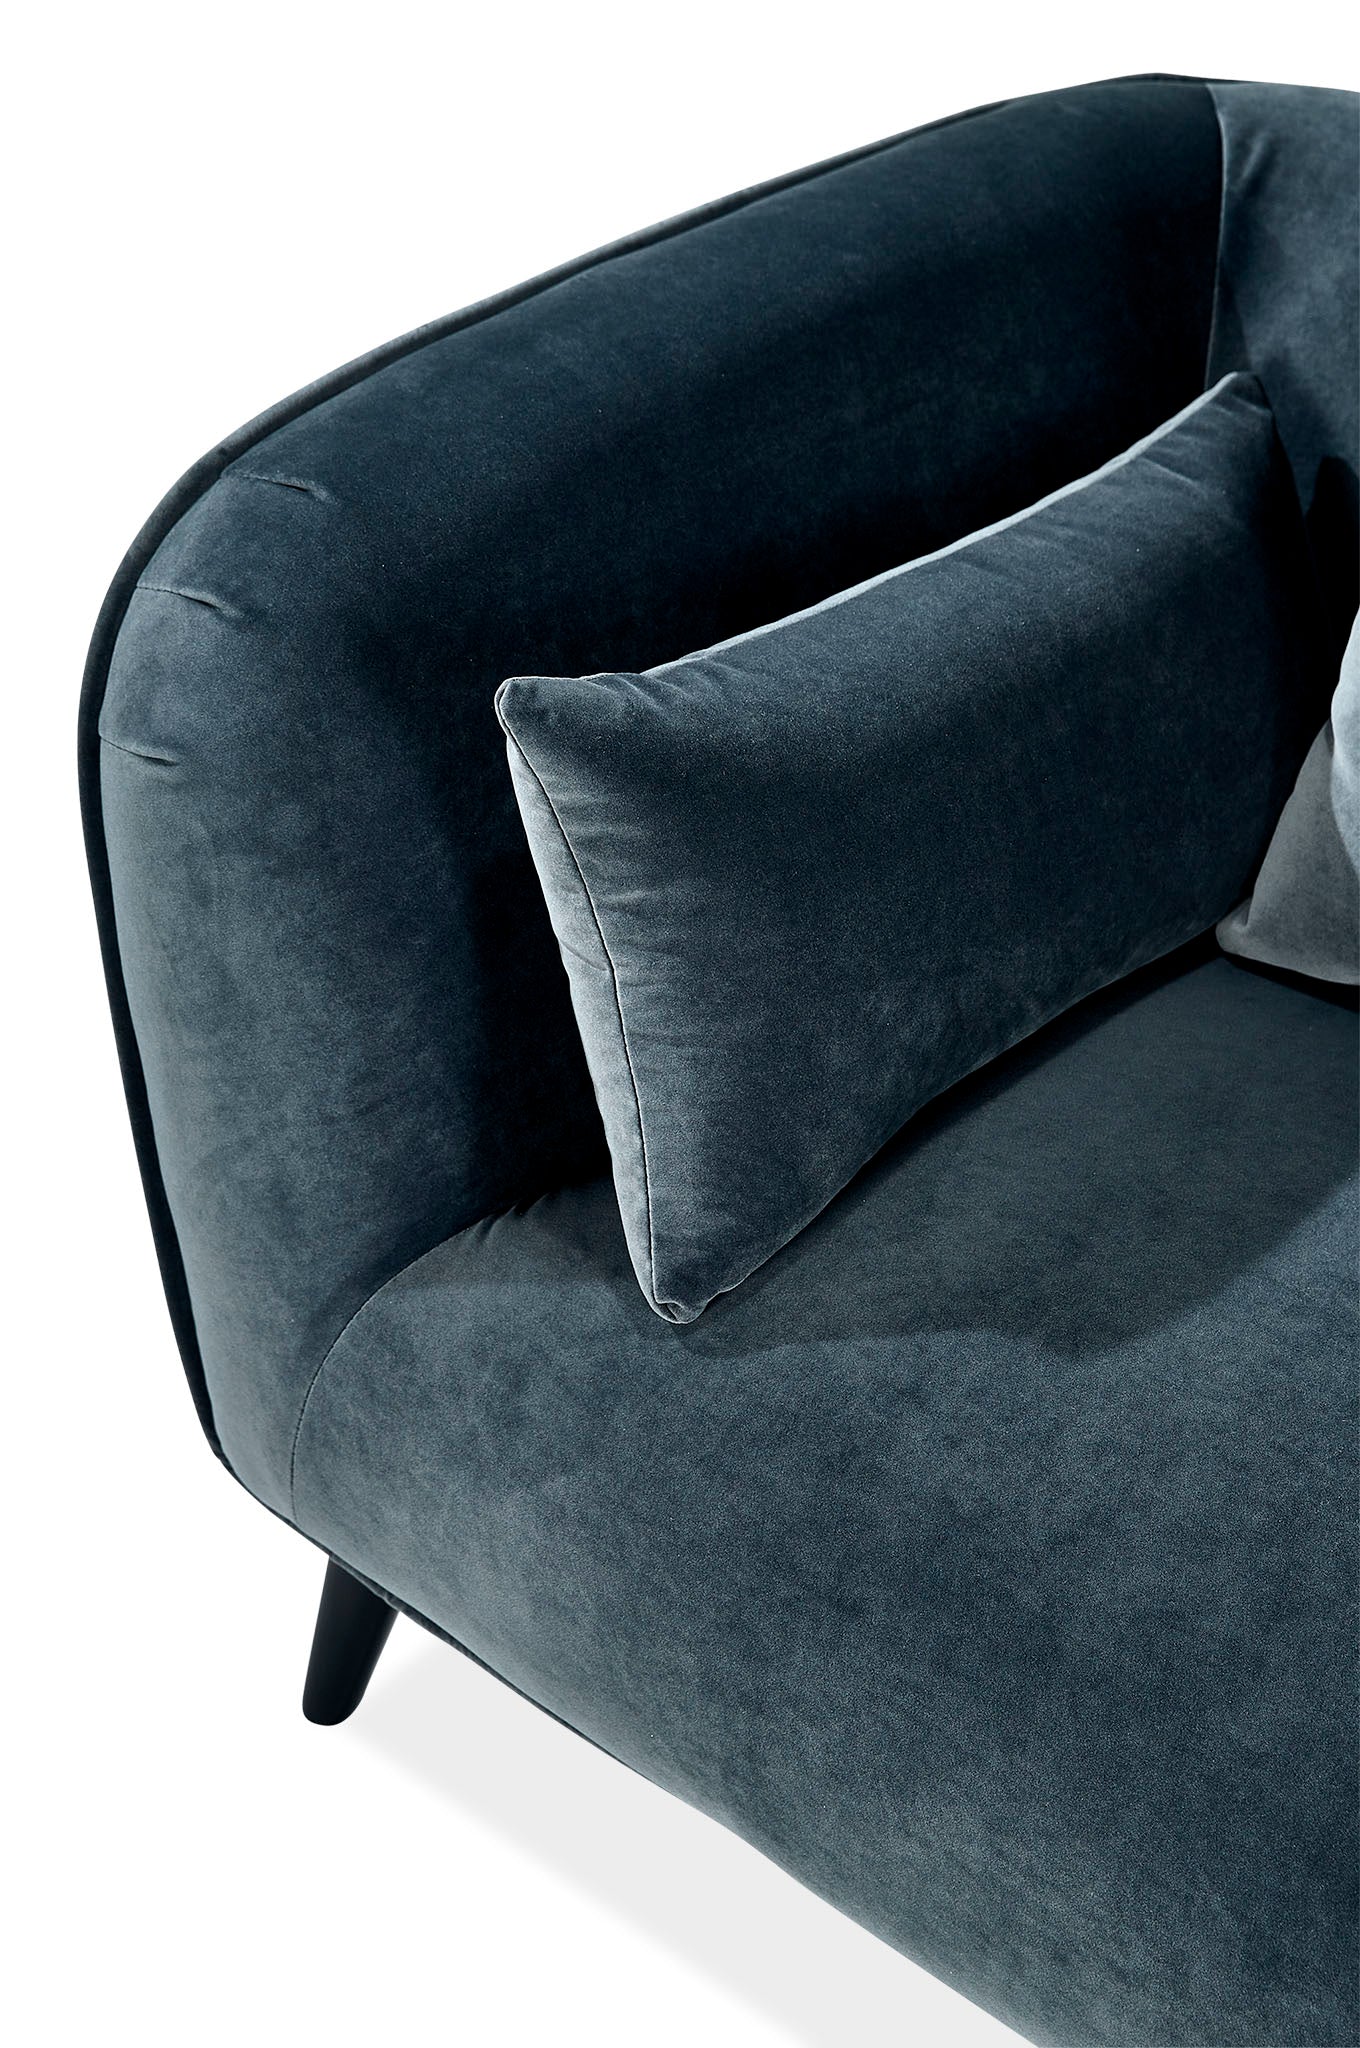 Maja Sofa and Accent Chair Set - Grey